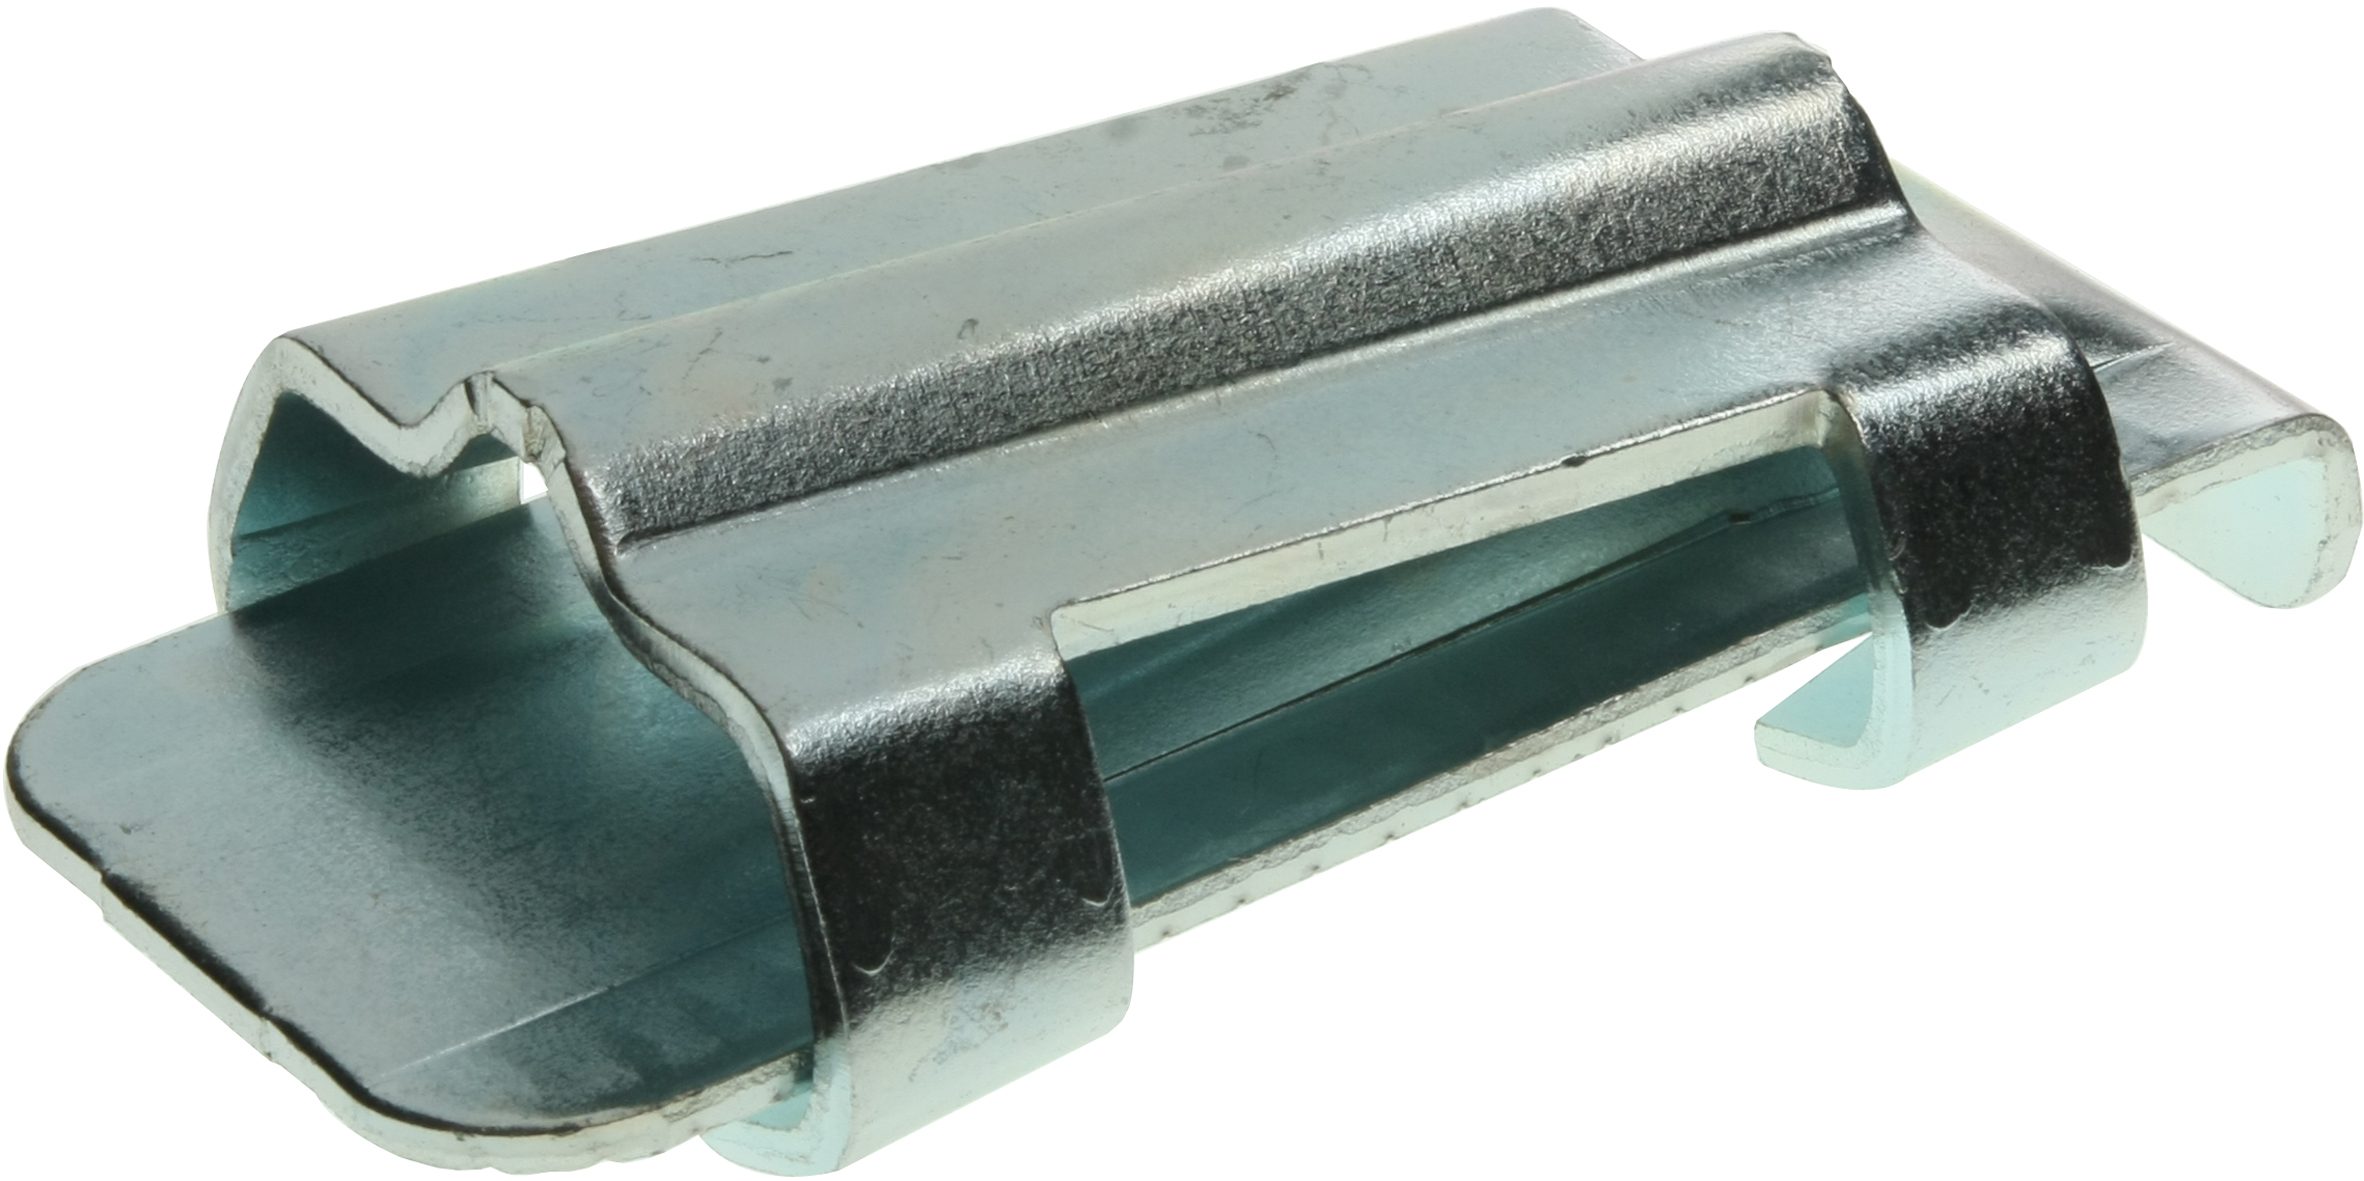 Wedge type connector of galvanized steel